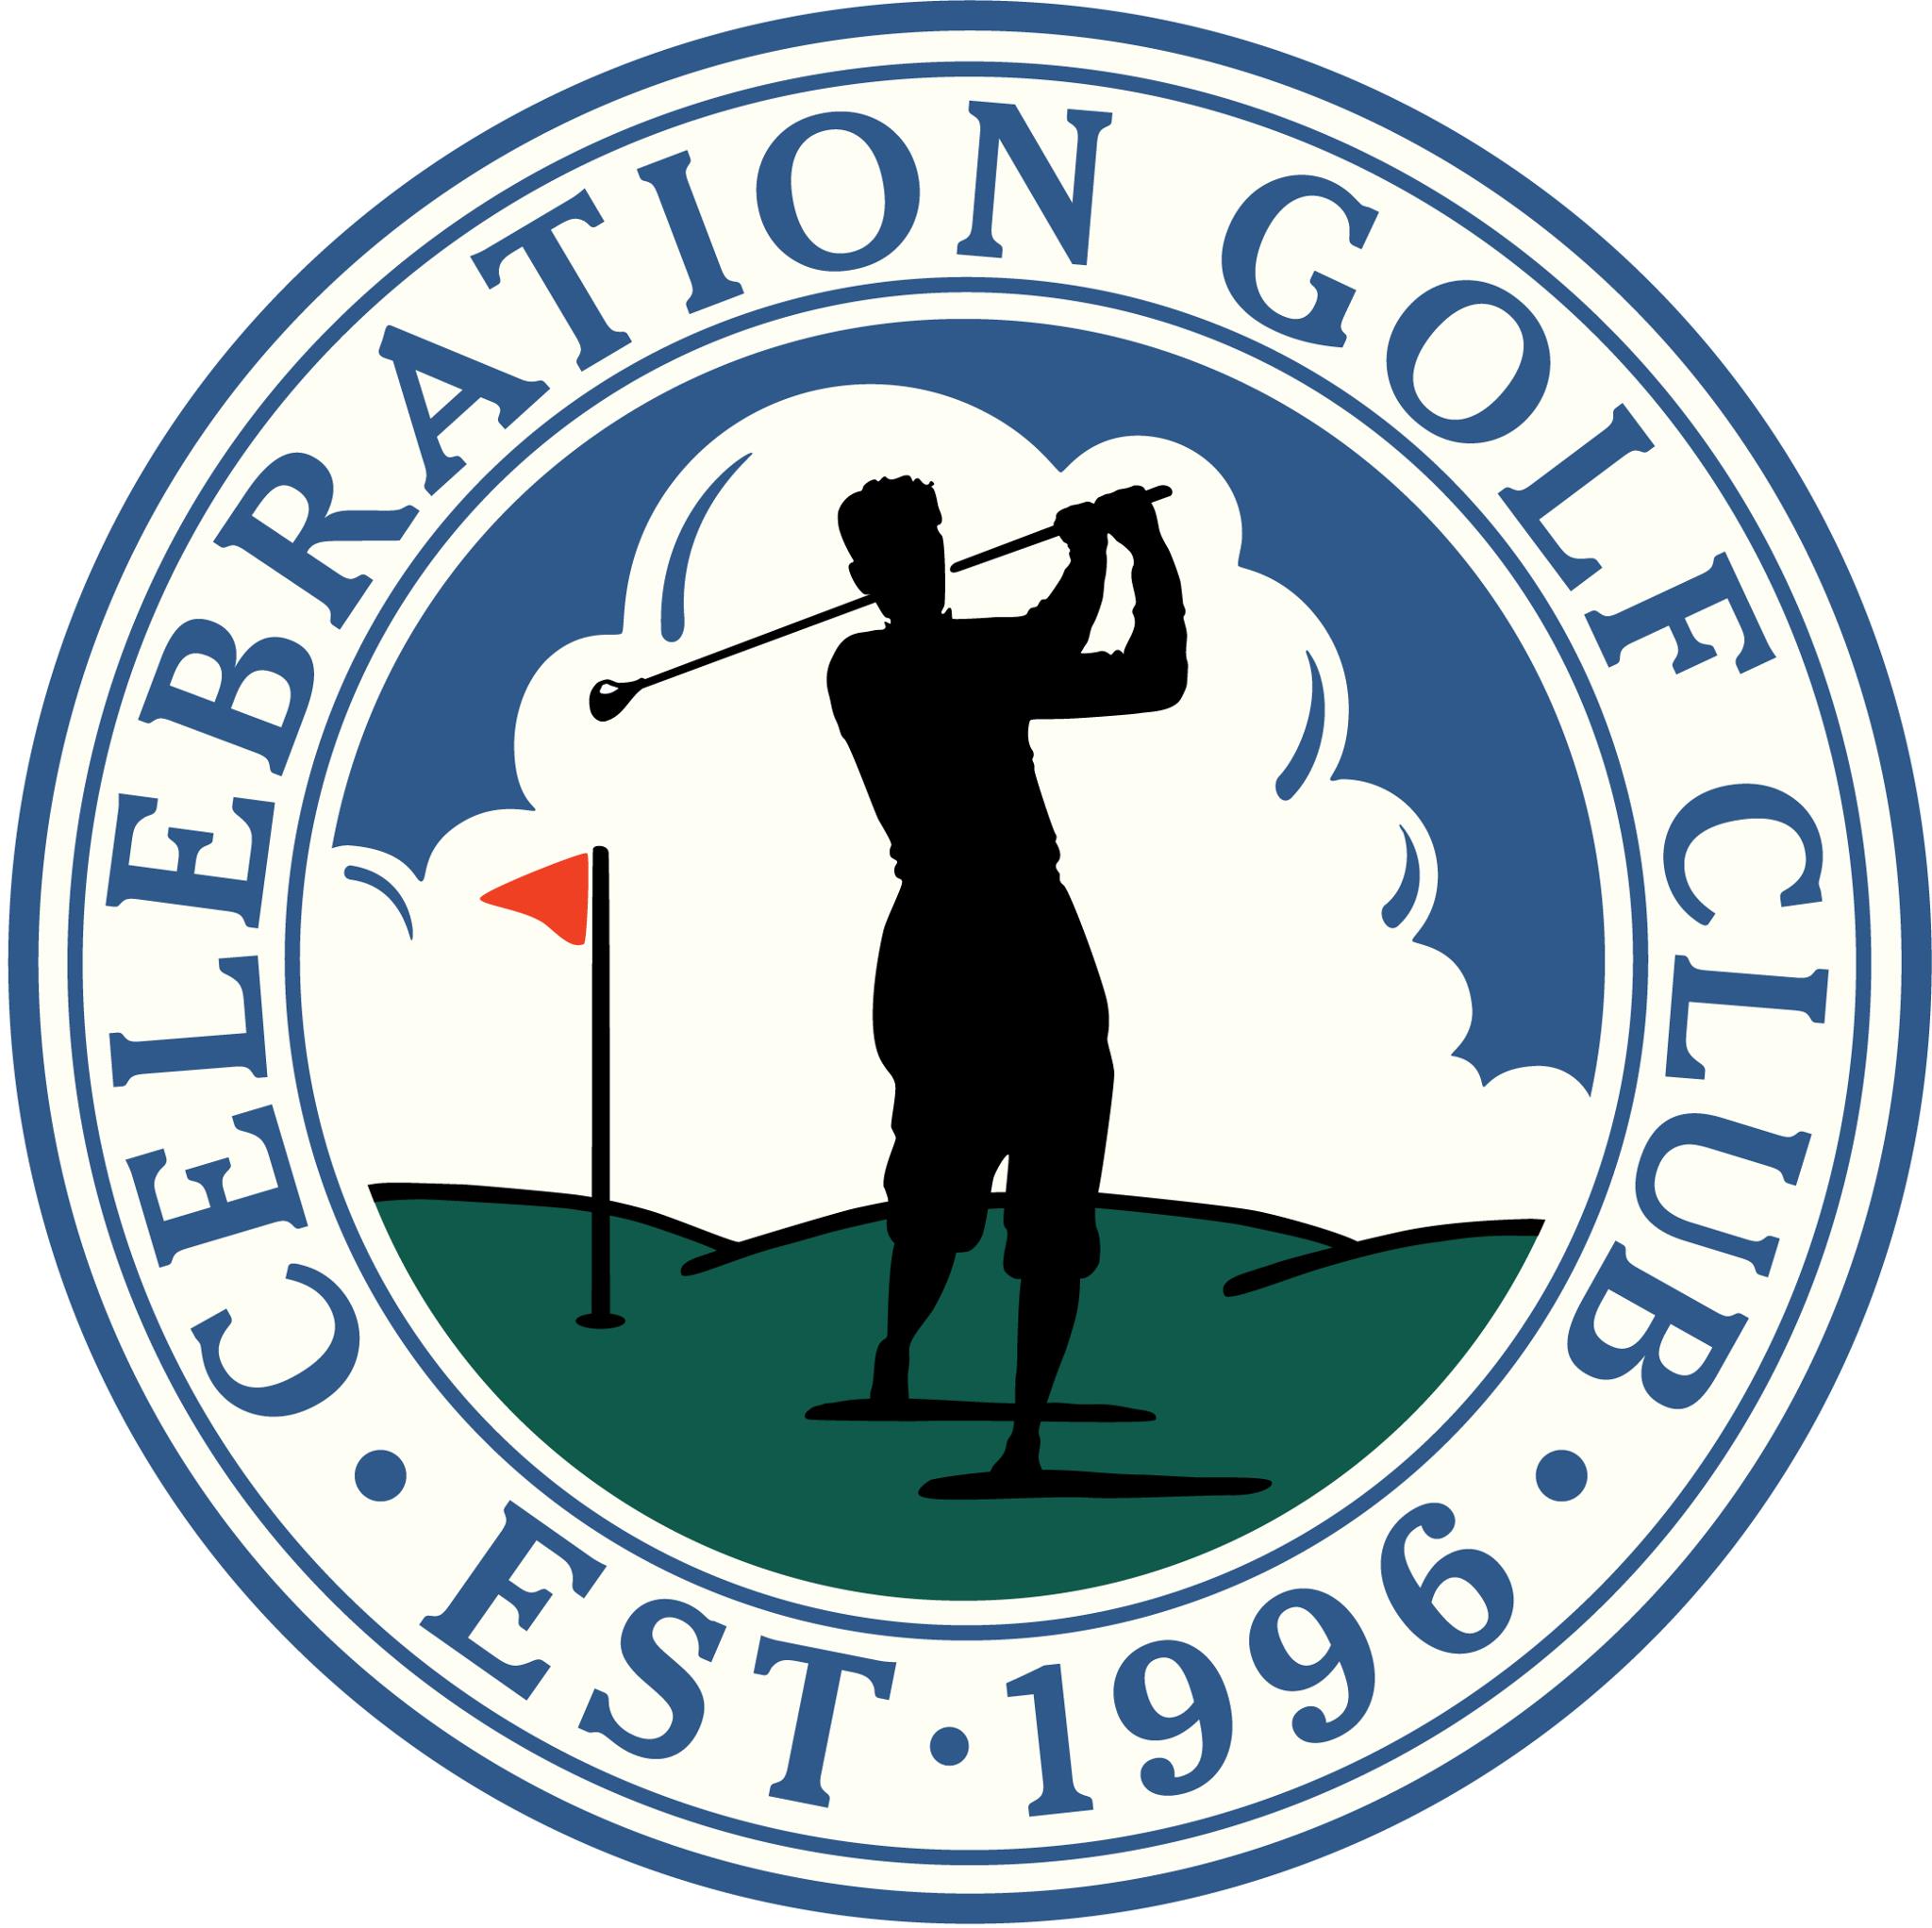 Celebration Golf Club company Logo